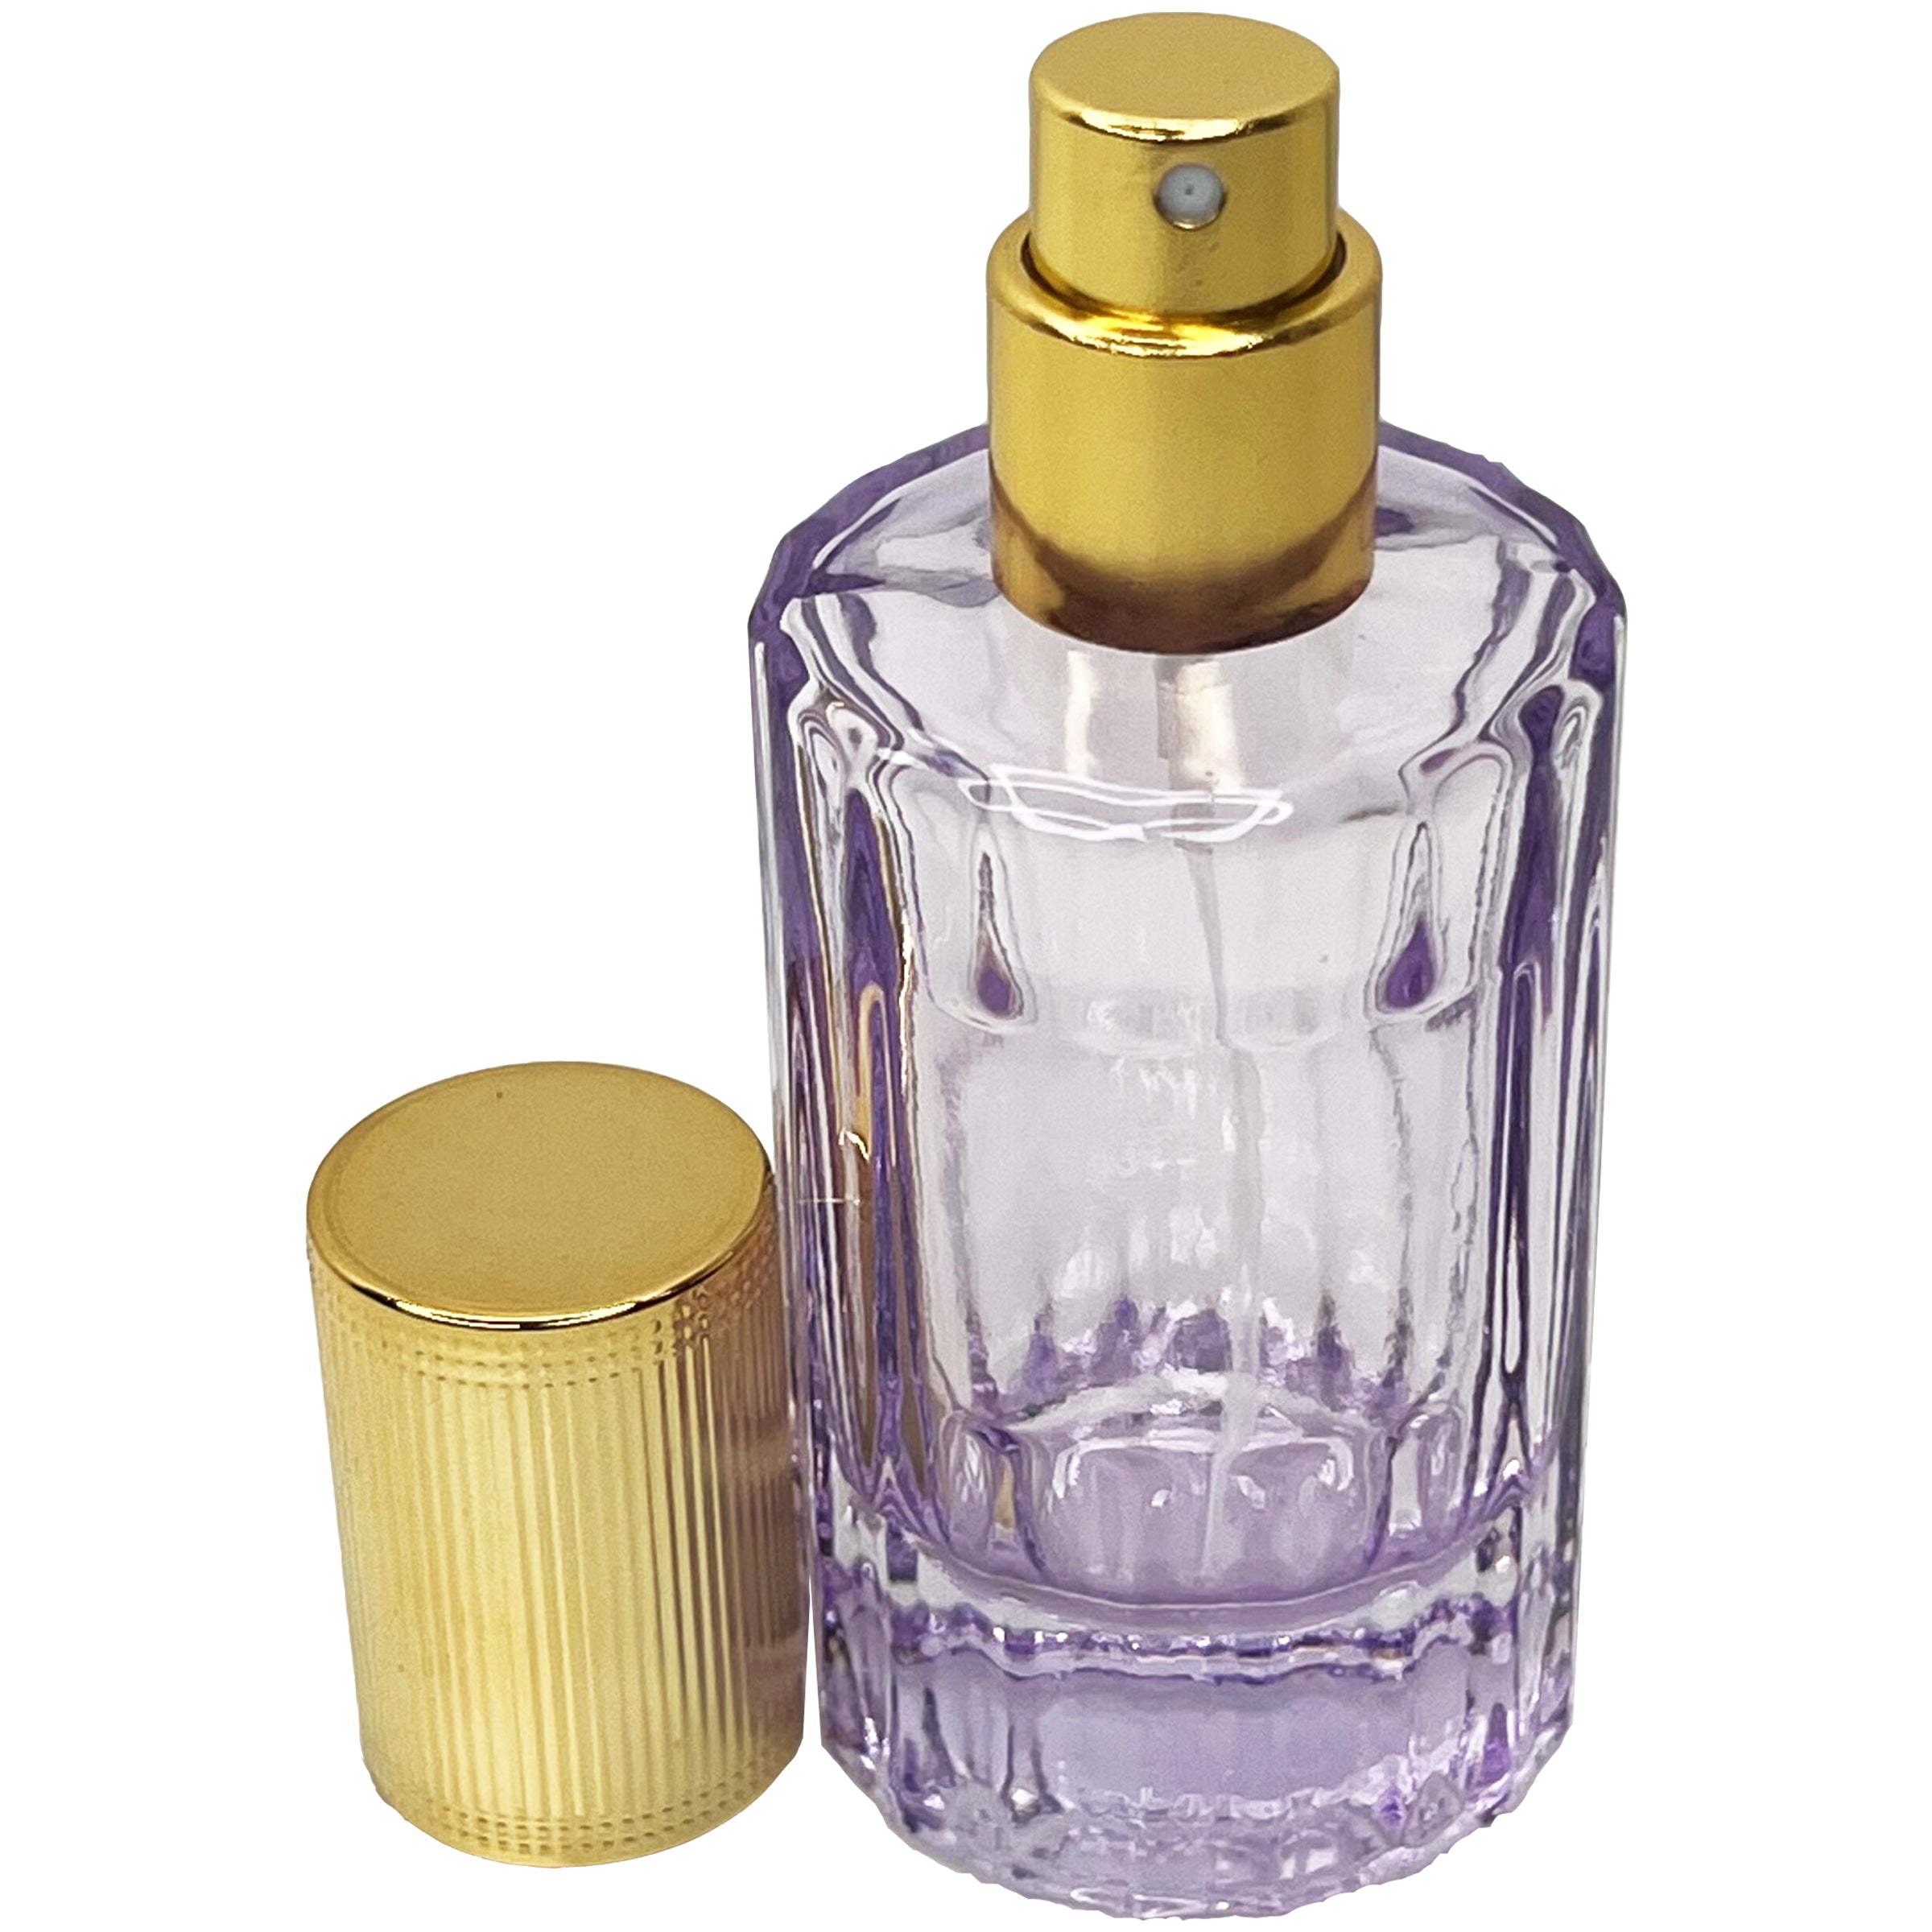 30ml 1oz colored glass cylinder perfume spray bottles